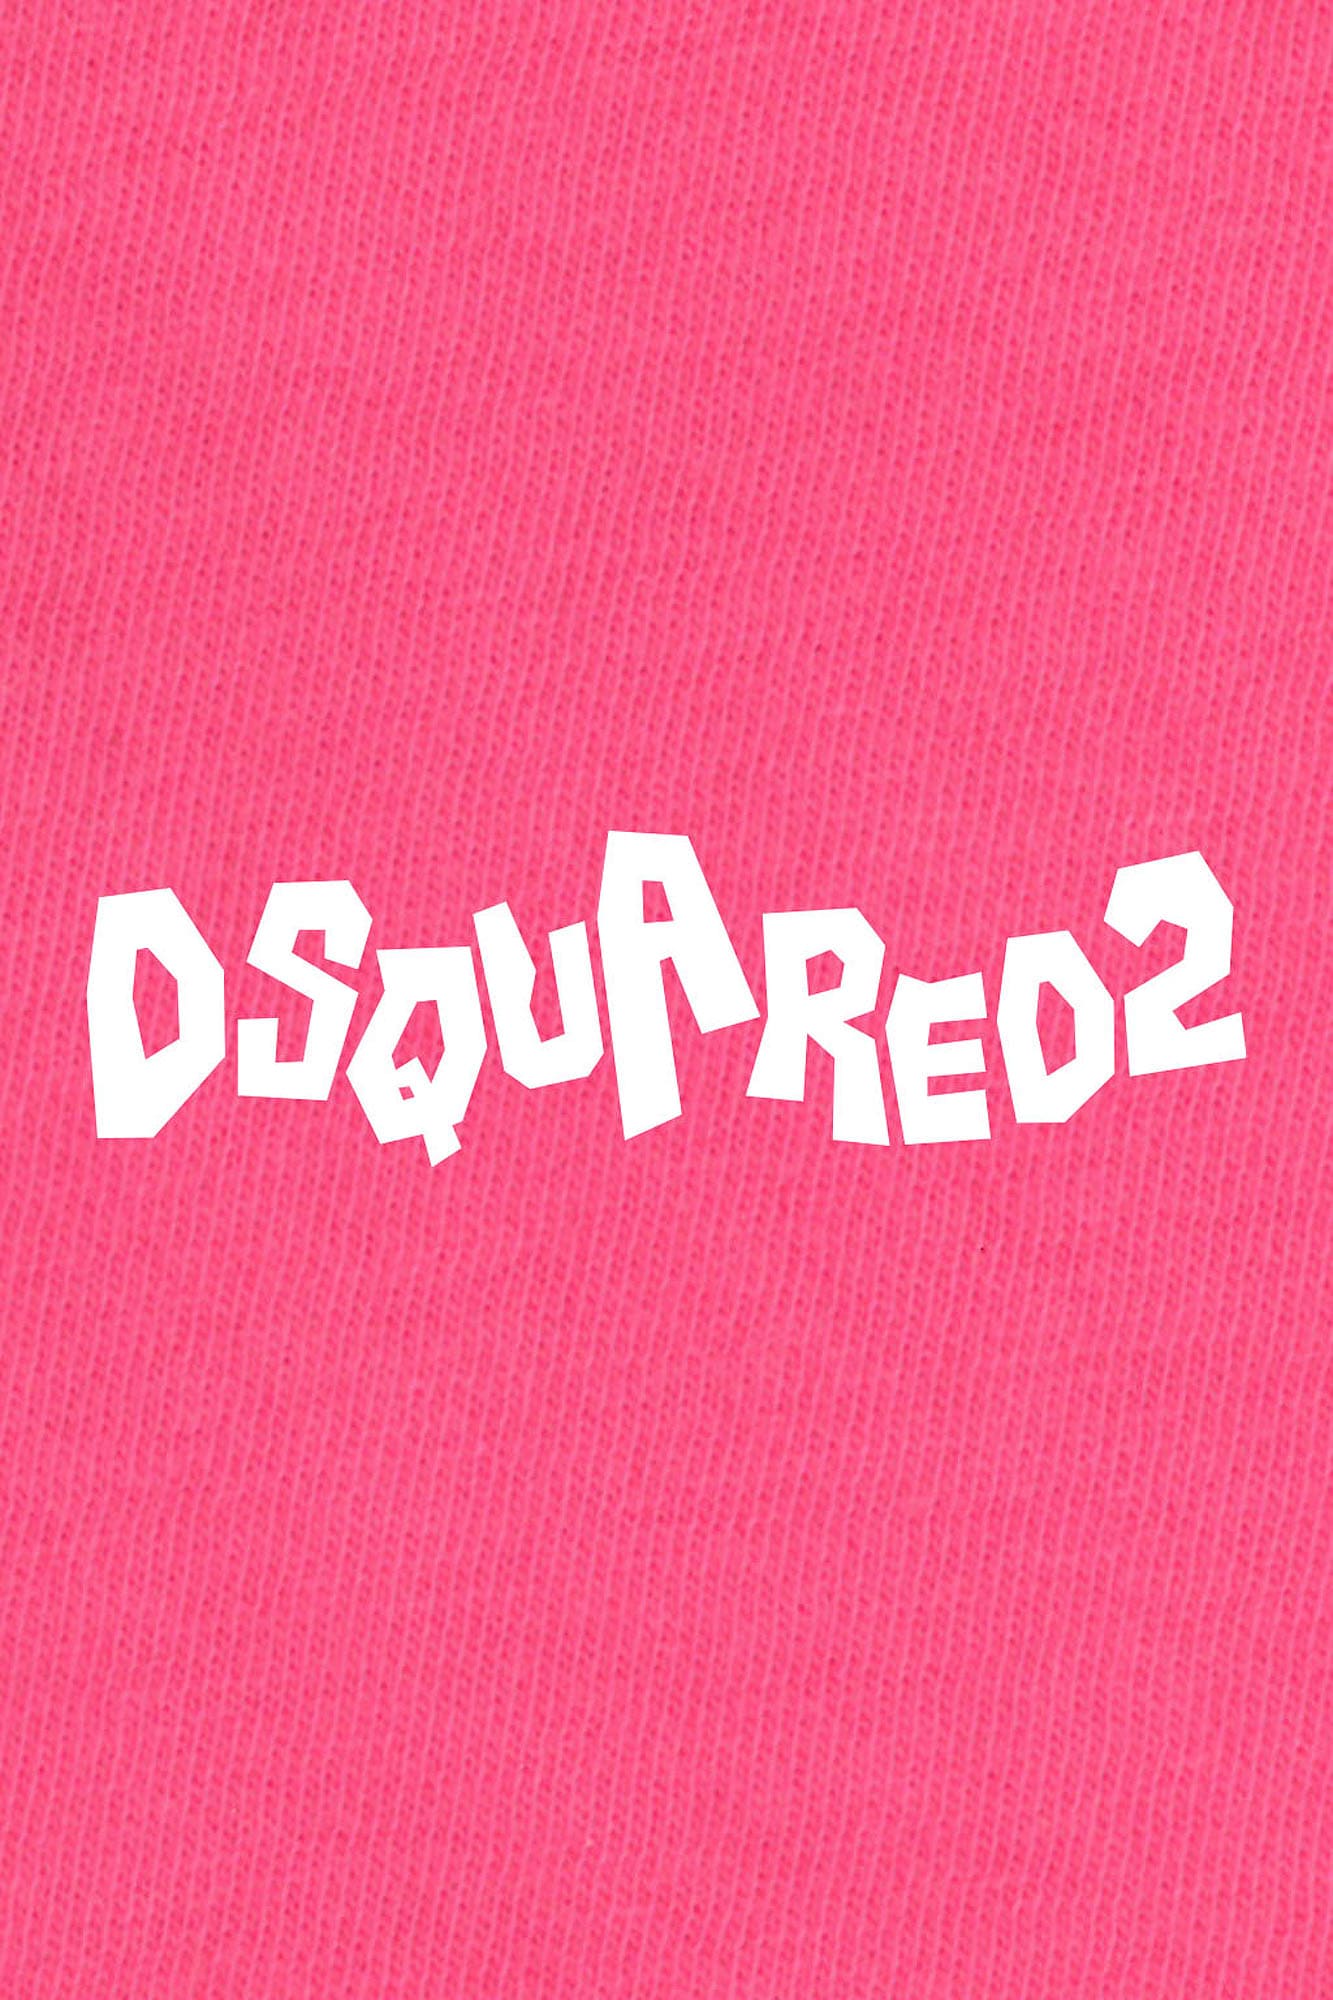 Dsquared2 T-shirts